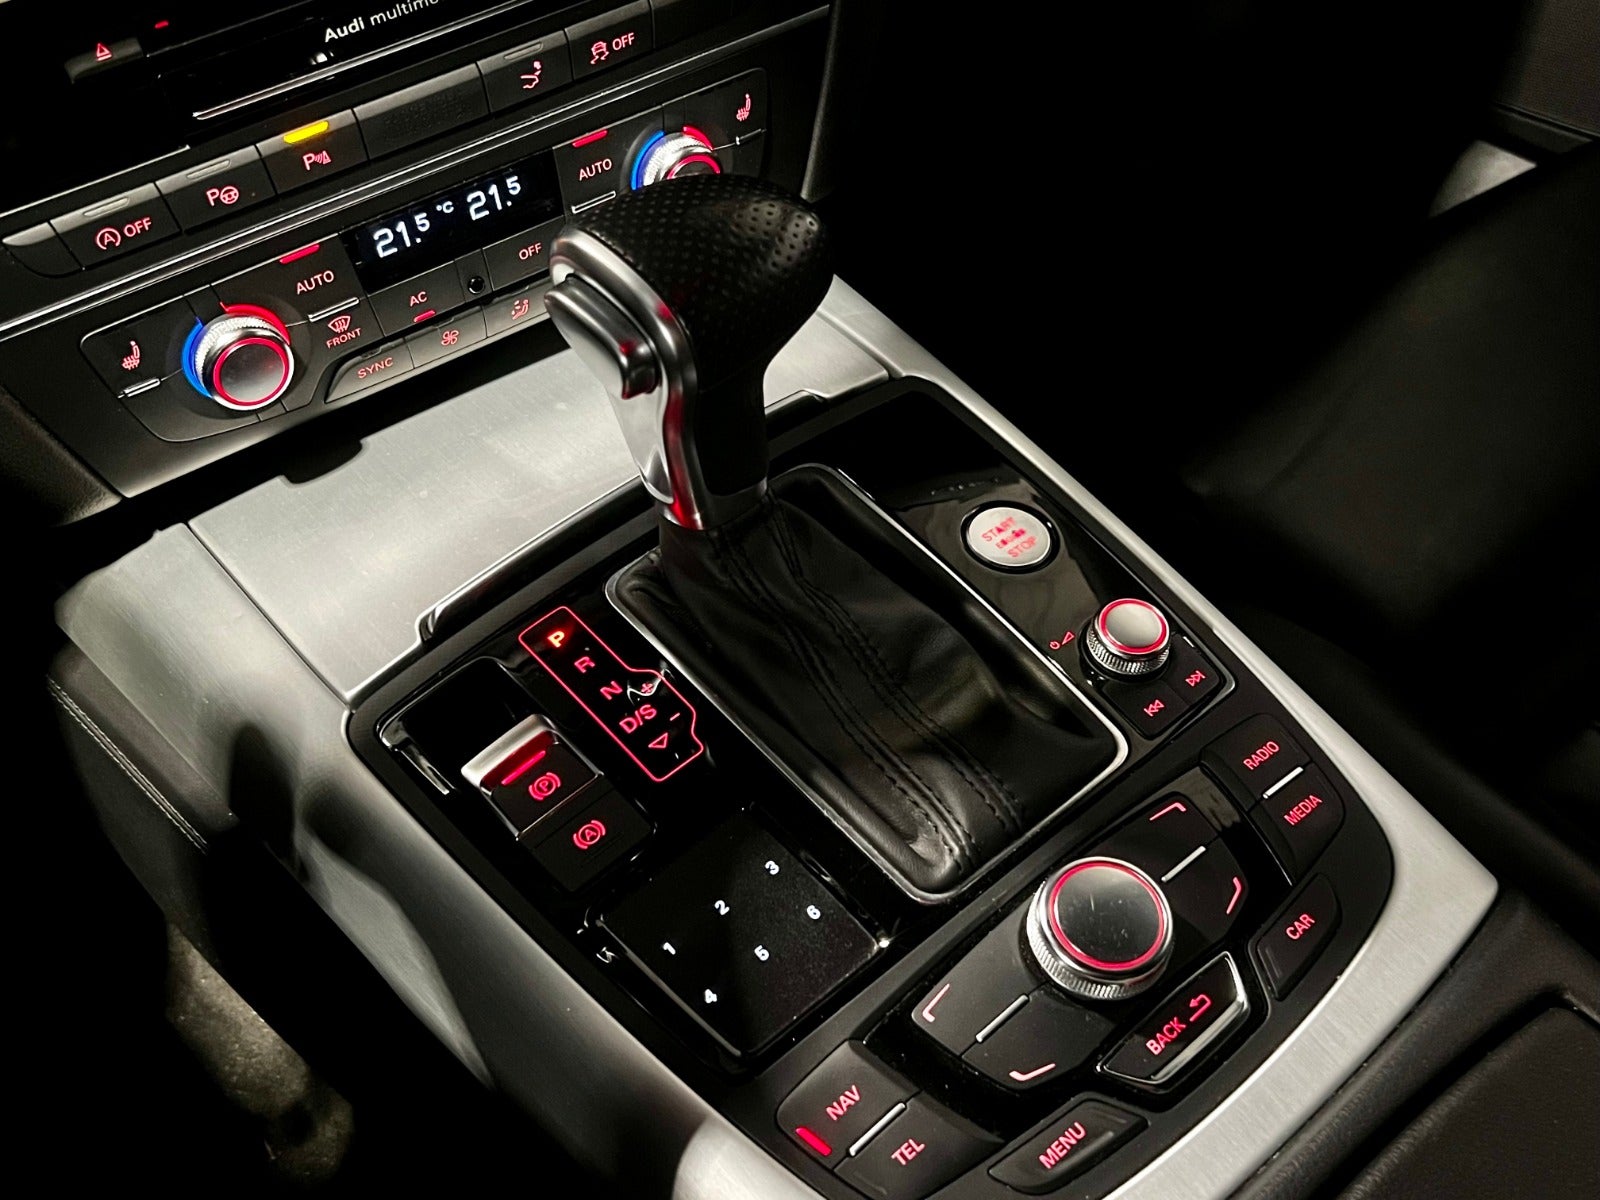 Audi A7 2013